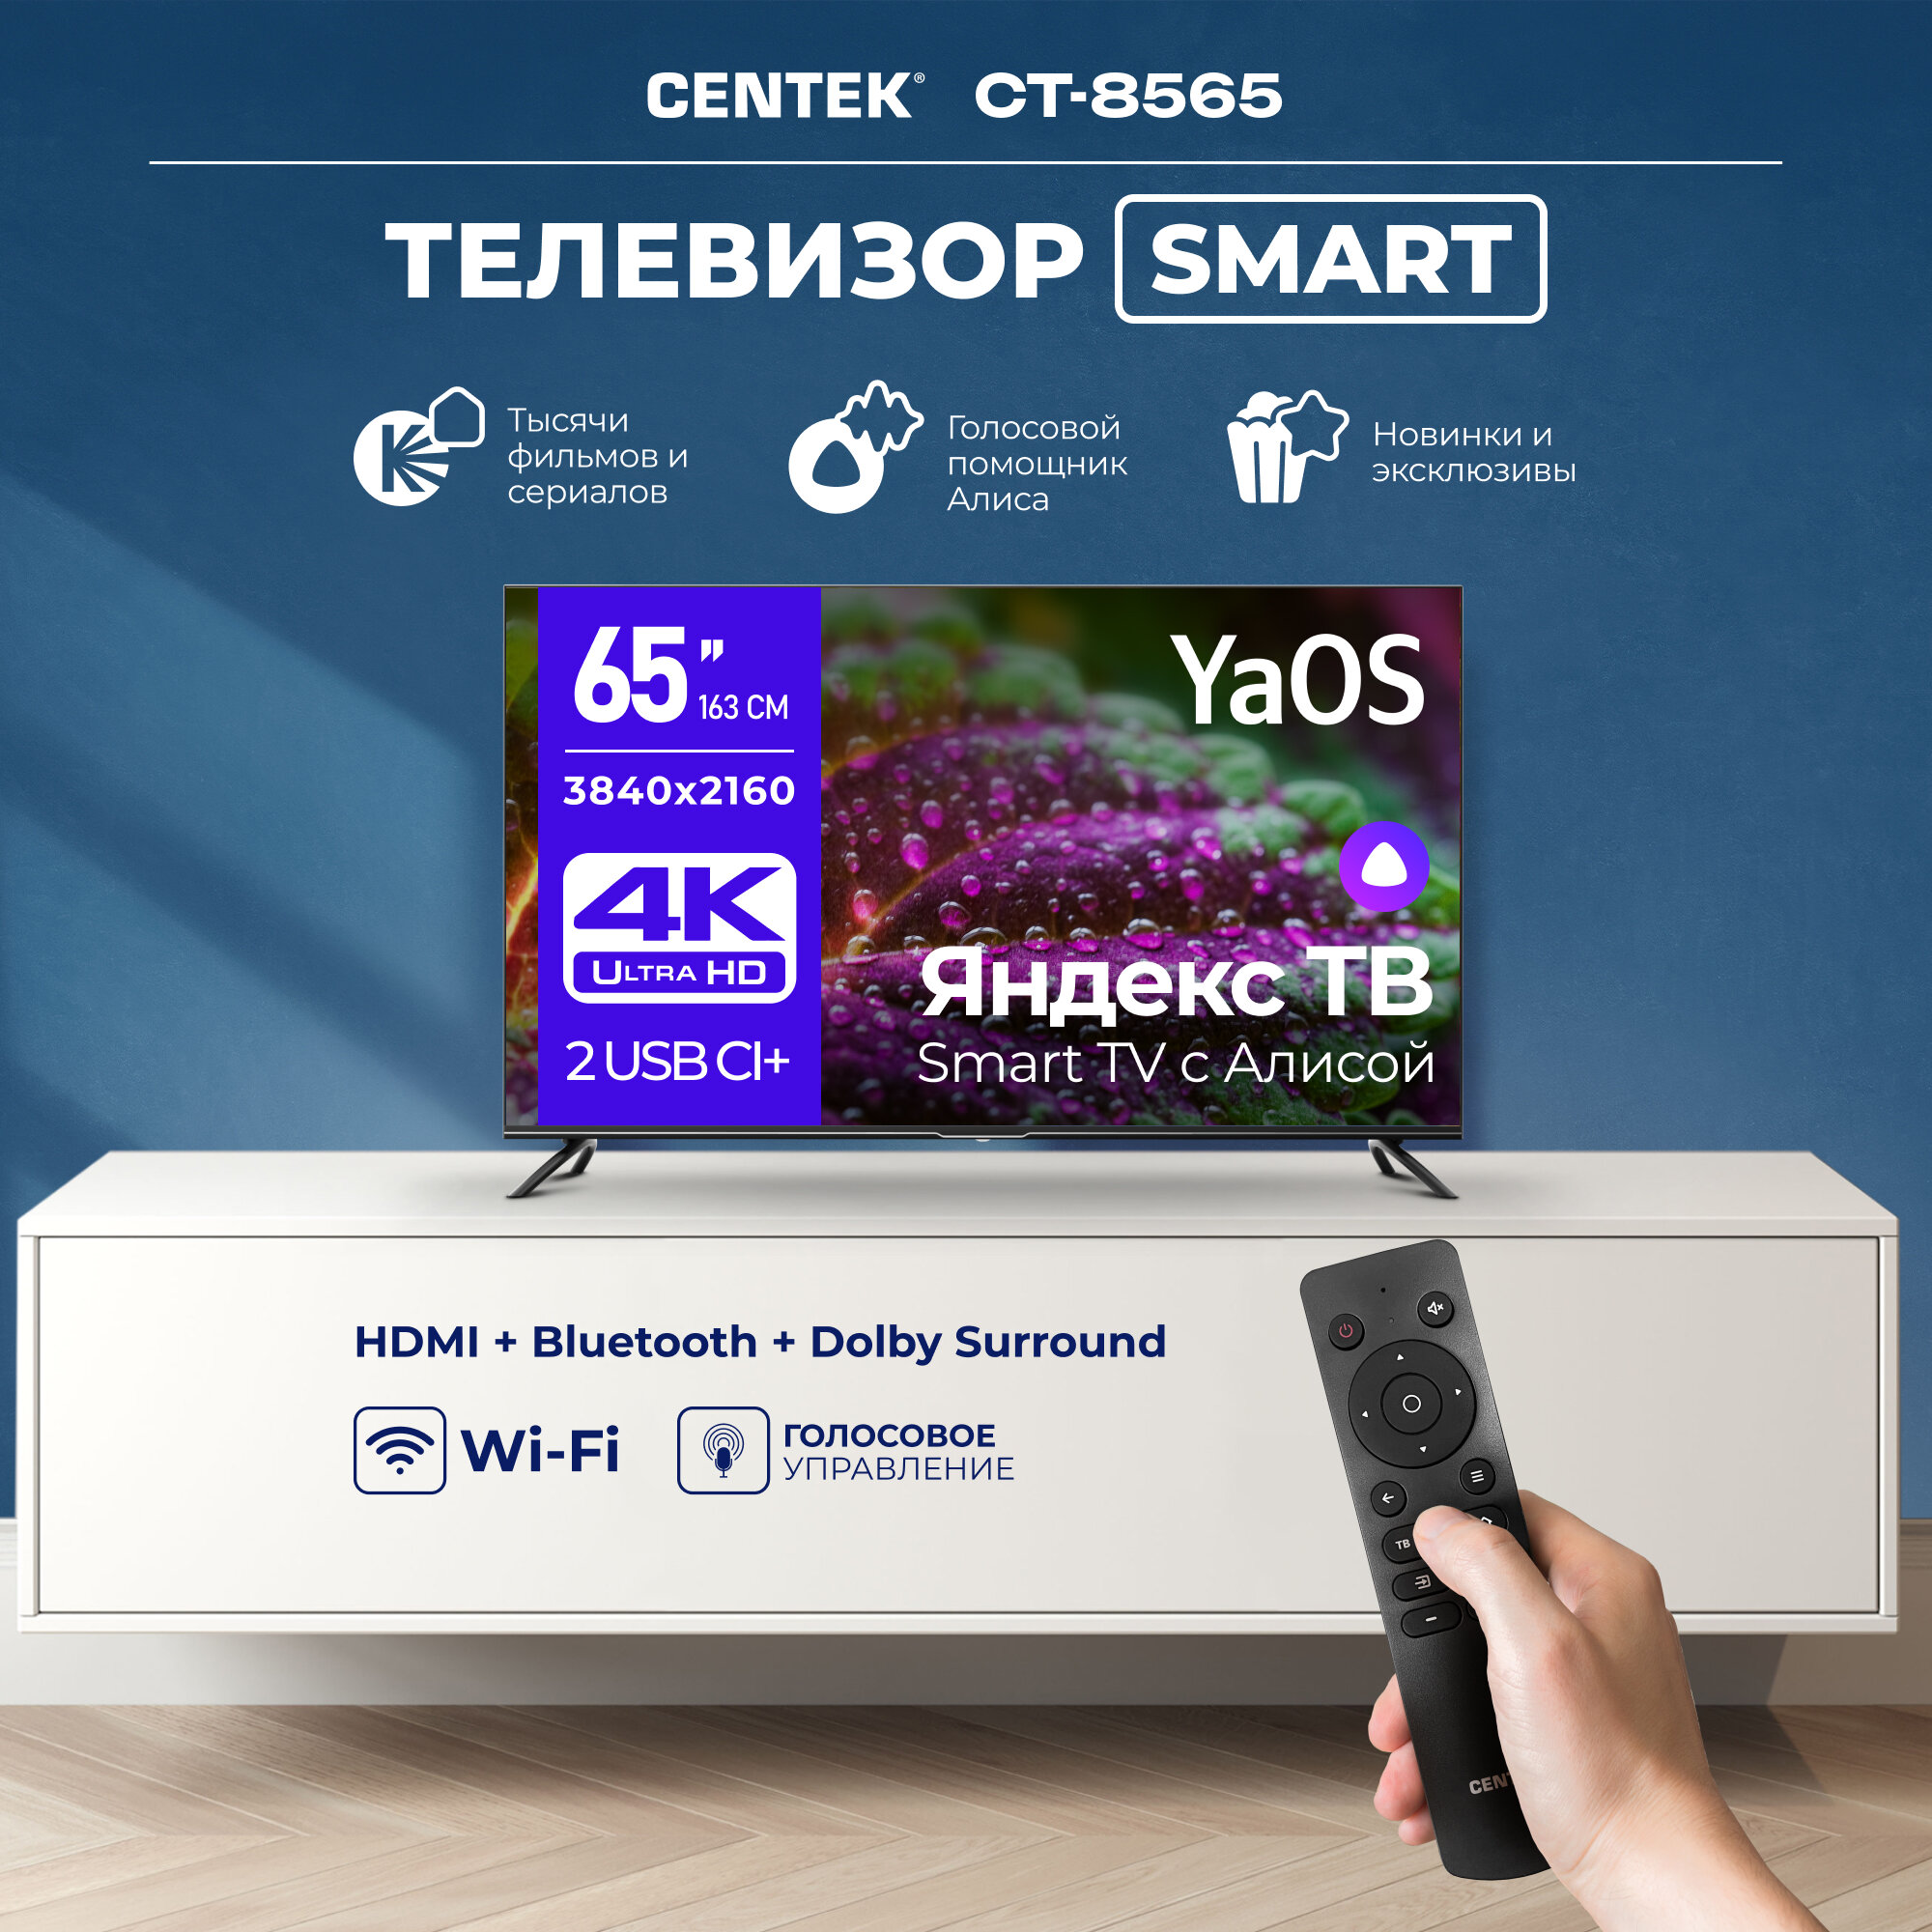 Телевизор Centek CT-8565, 65 дюймов с поддержкой 4К Ultra HD, Wi-Fi и Bluetooth, Яндекс YaOS